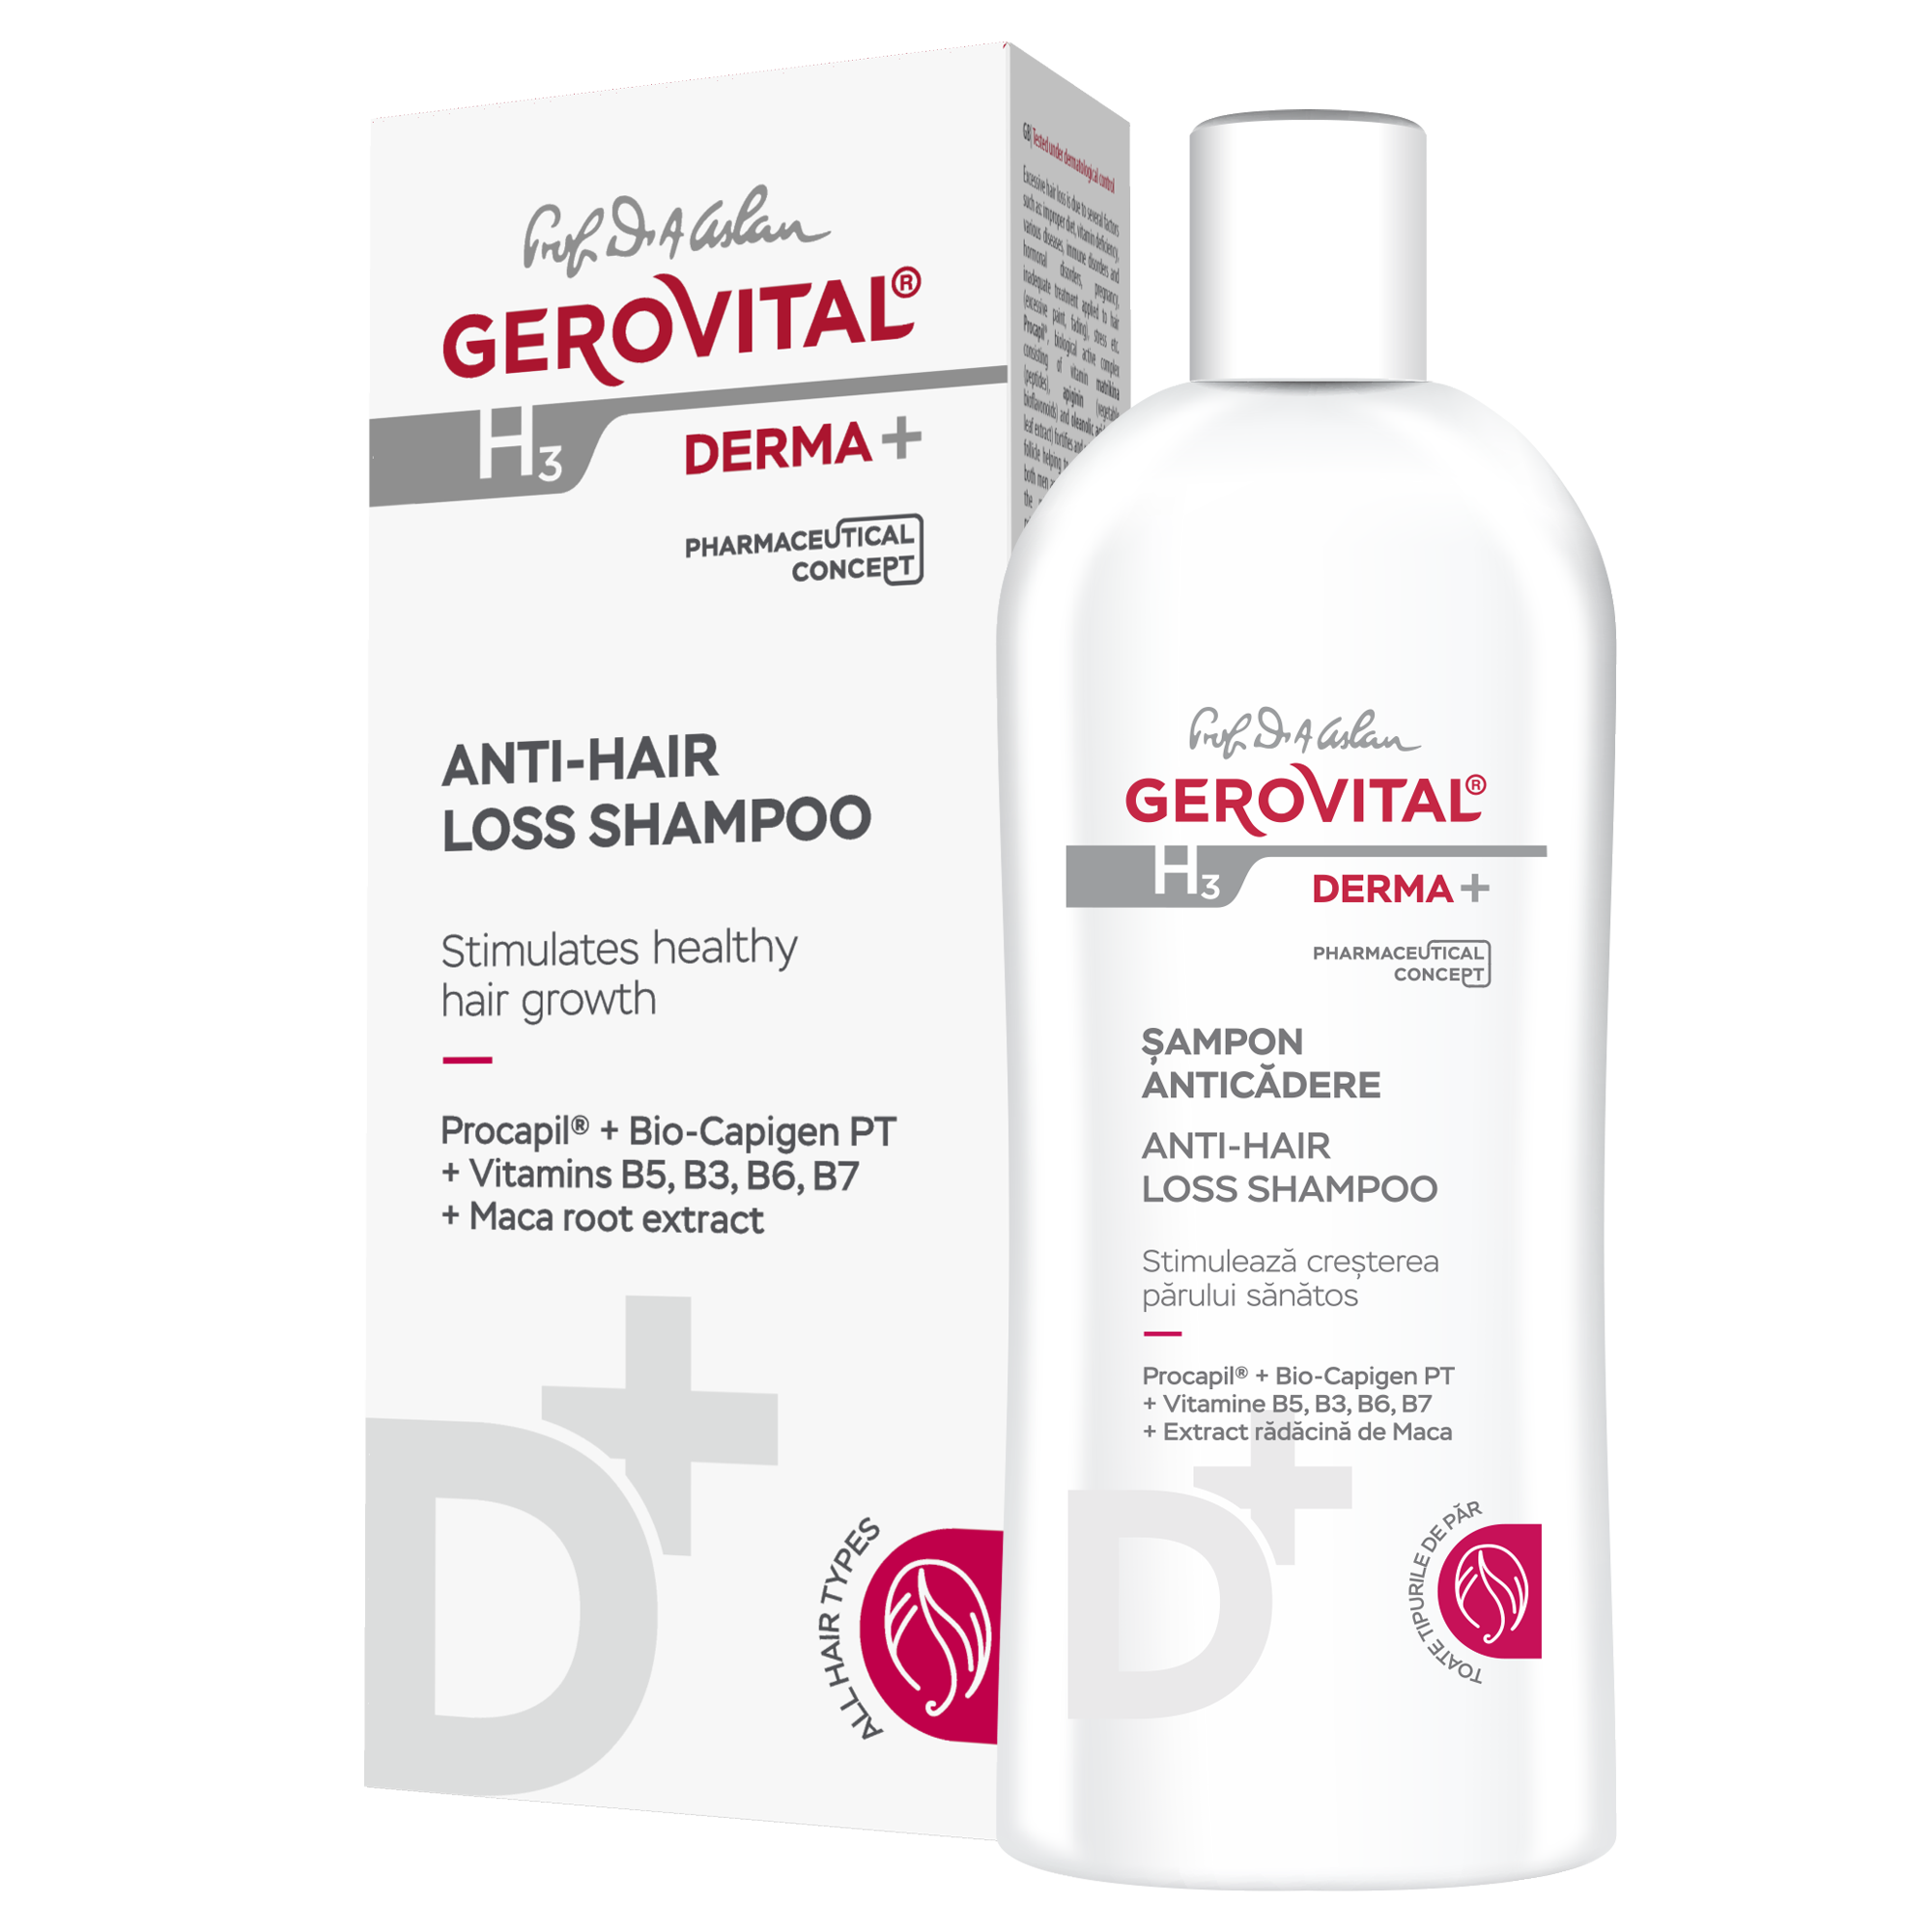 Sampon anticadere Gerovital H3 Derma+, 200 ml, Gerovital